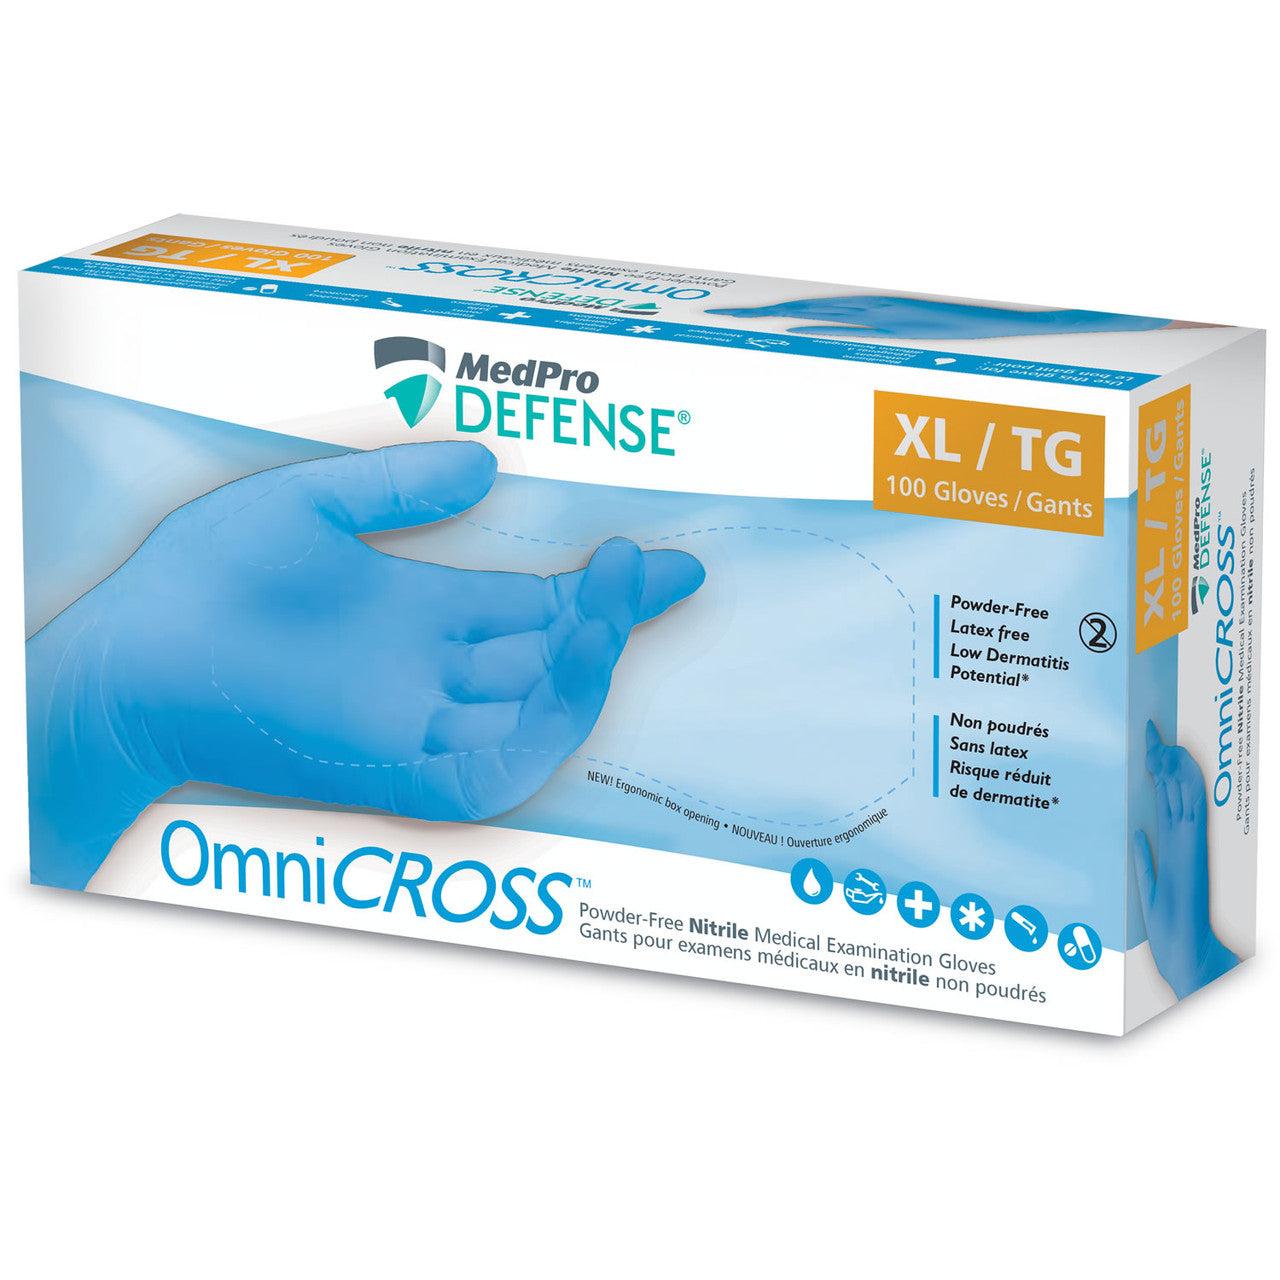 Nitrile Powder-free Gloves MedPro Defense Omnicross